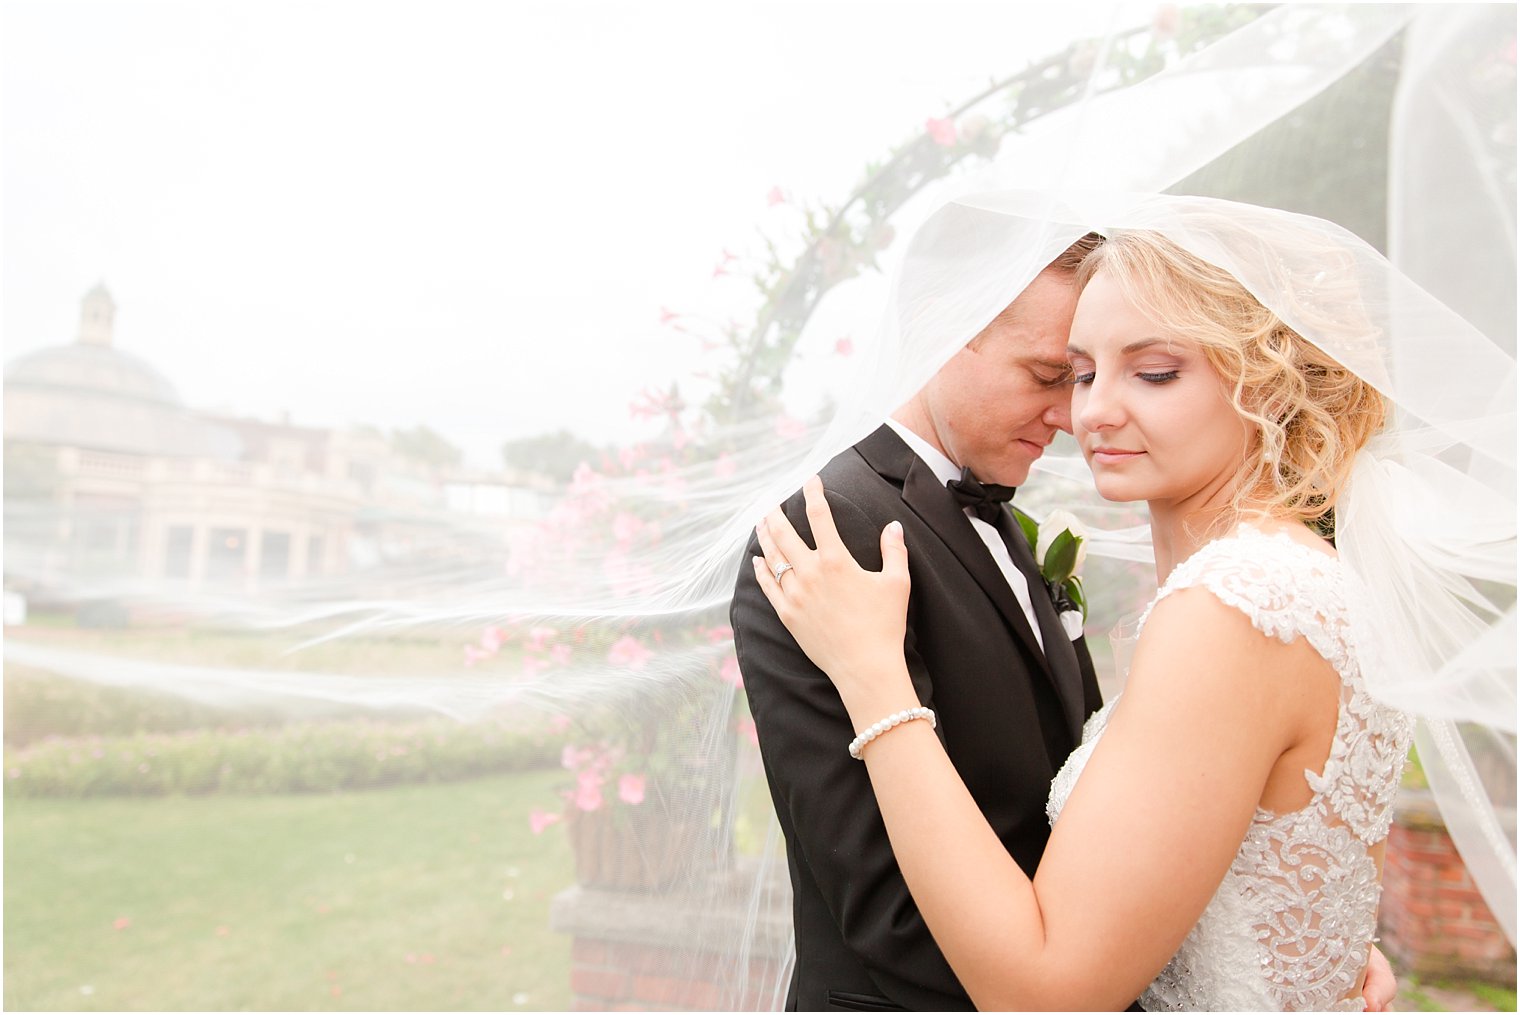 Romantic veil photo of bride and groom